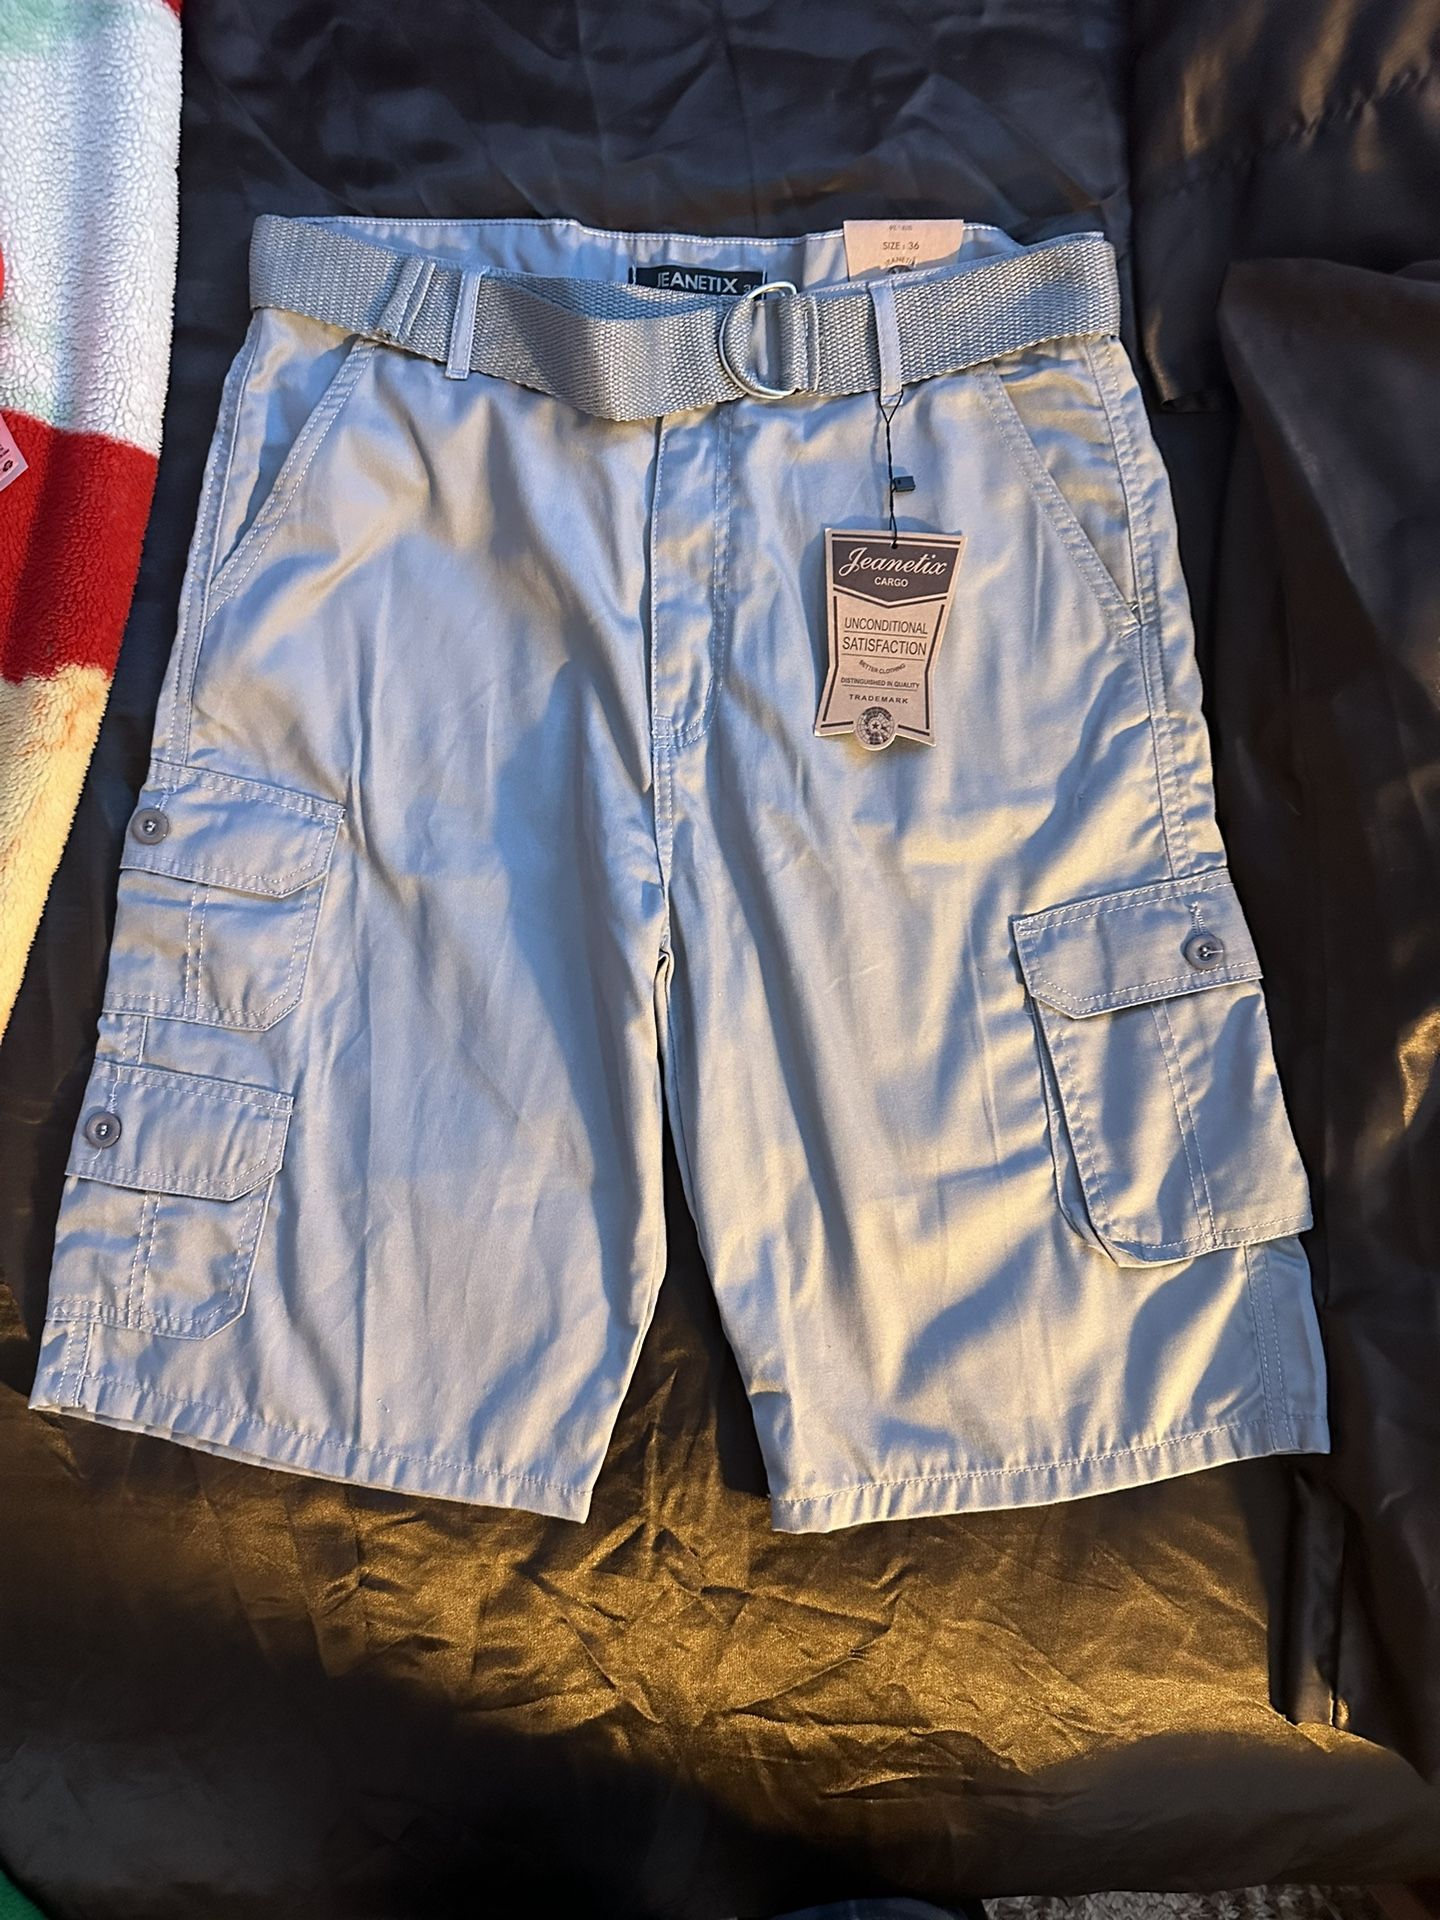 Tan/Khaki mens cargo shorts